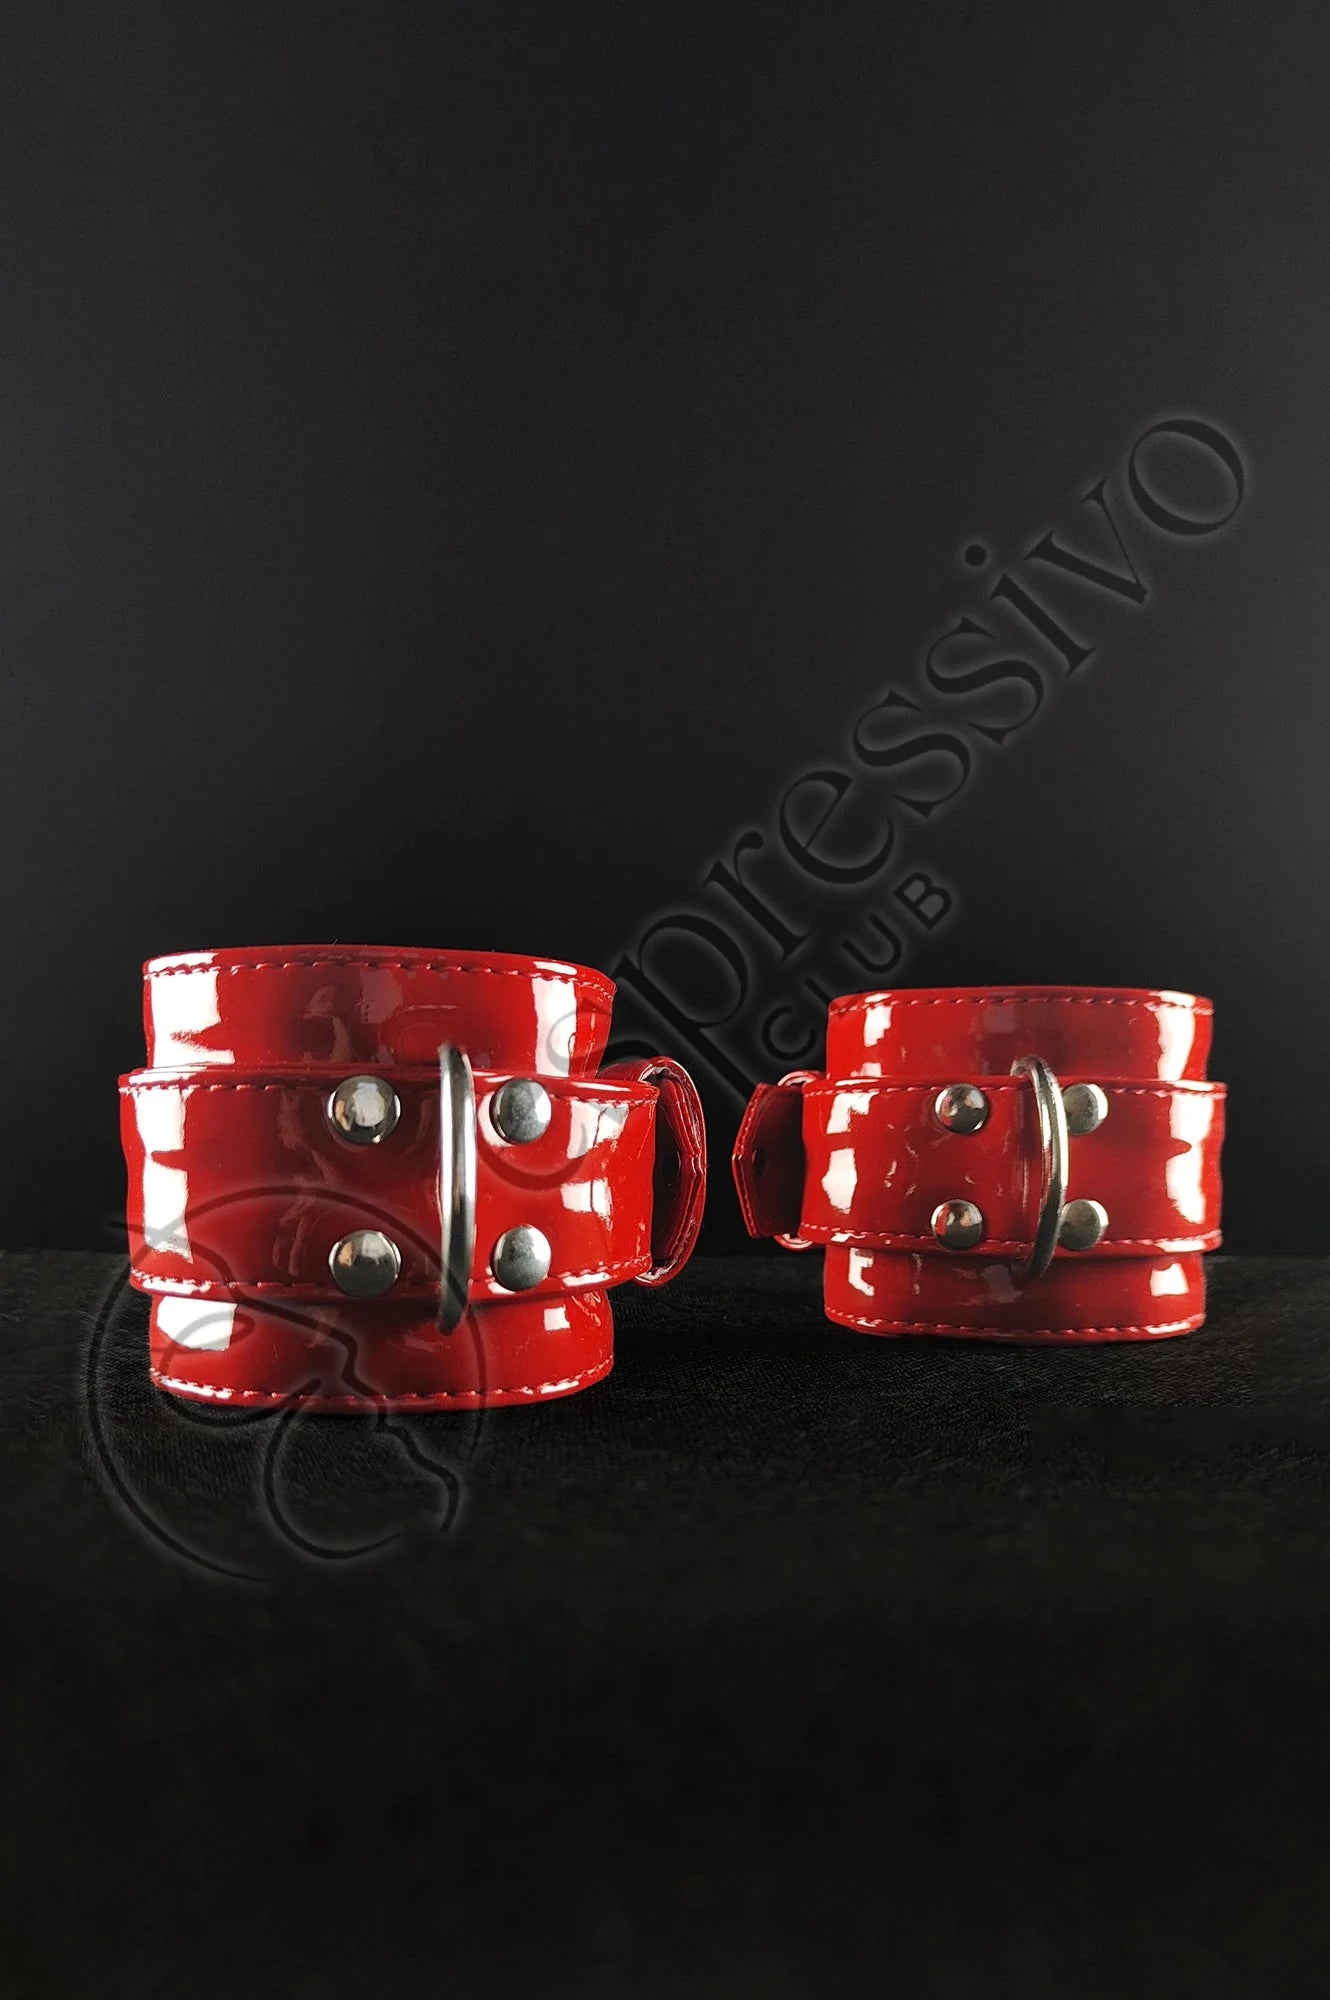 Bondage Cuffs In Red Pvc - Wrist & Ankle Bdsm Restraints Jewelry